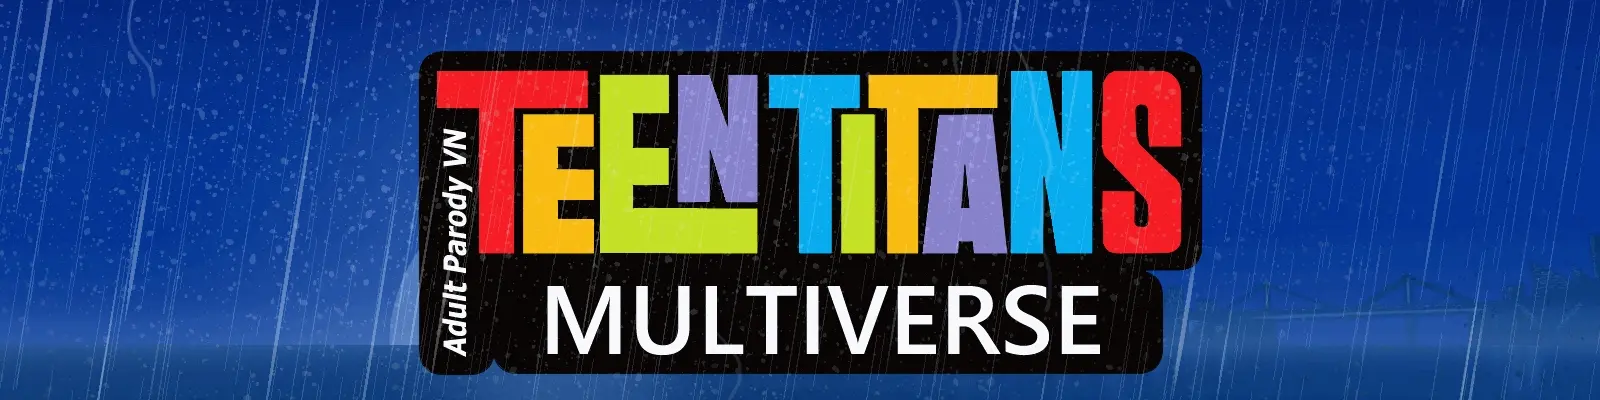 Teen Titans Multiverse main image